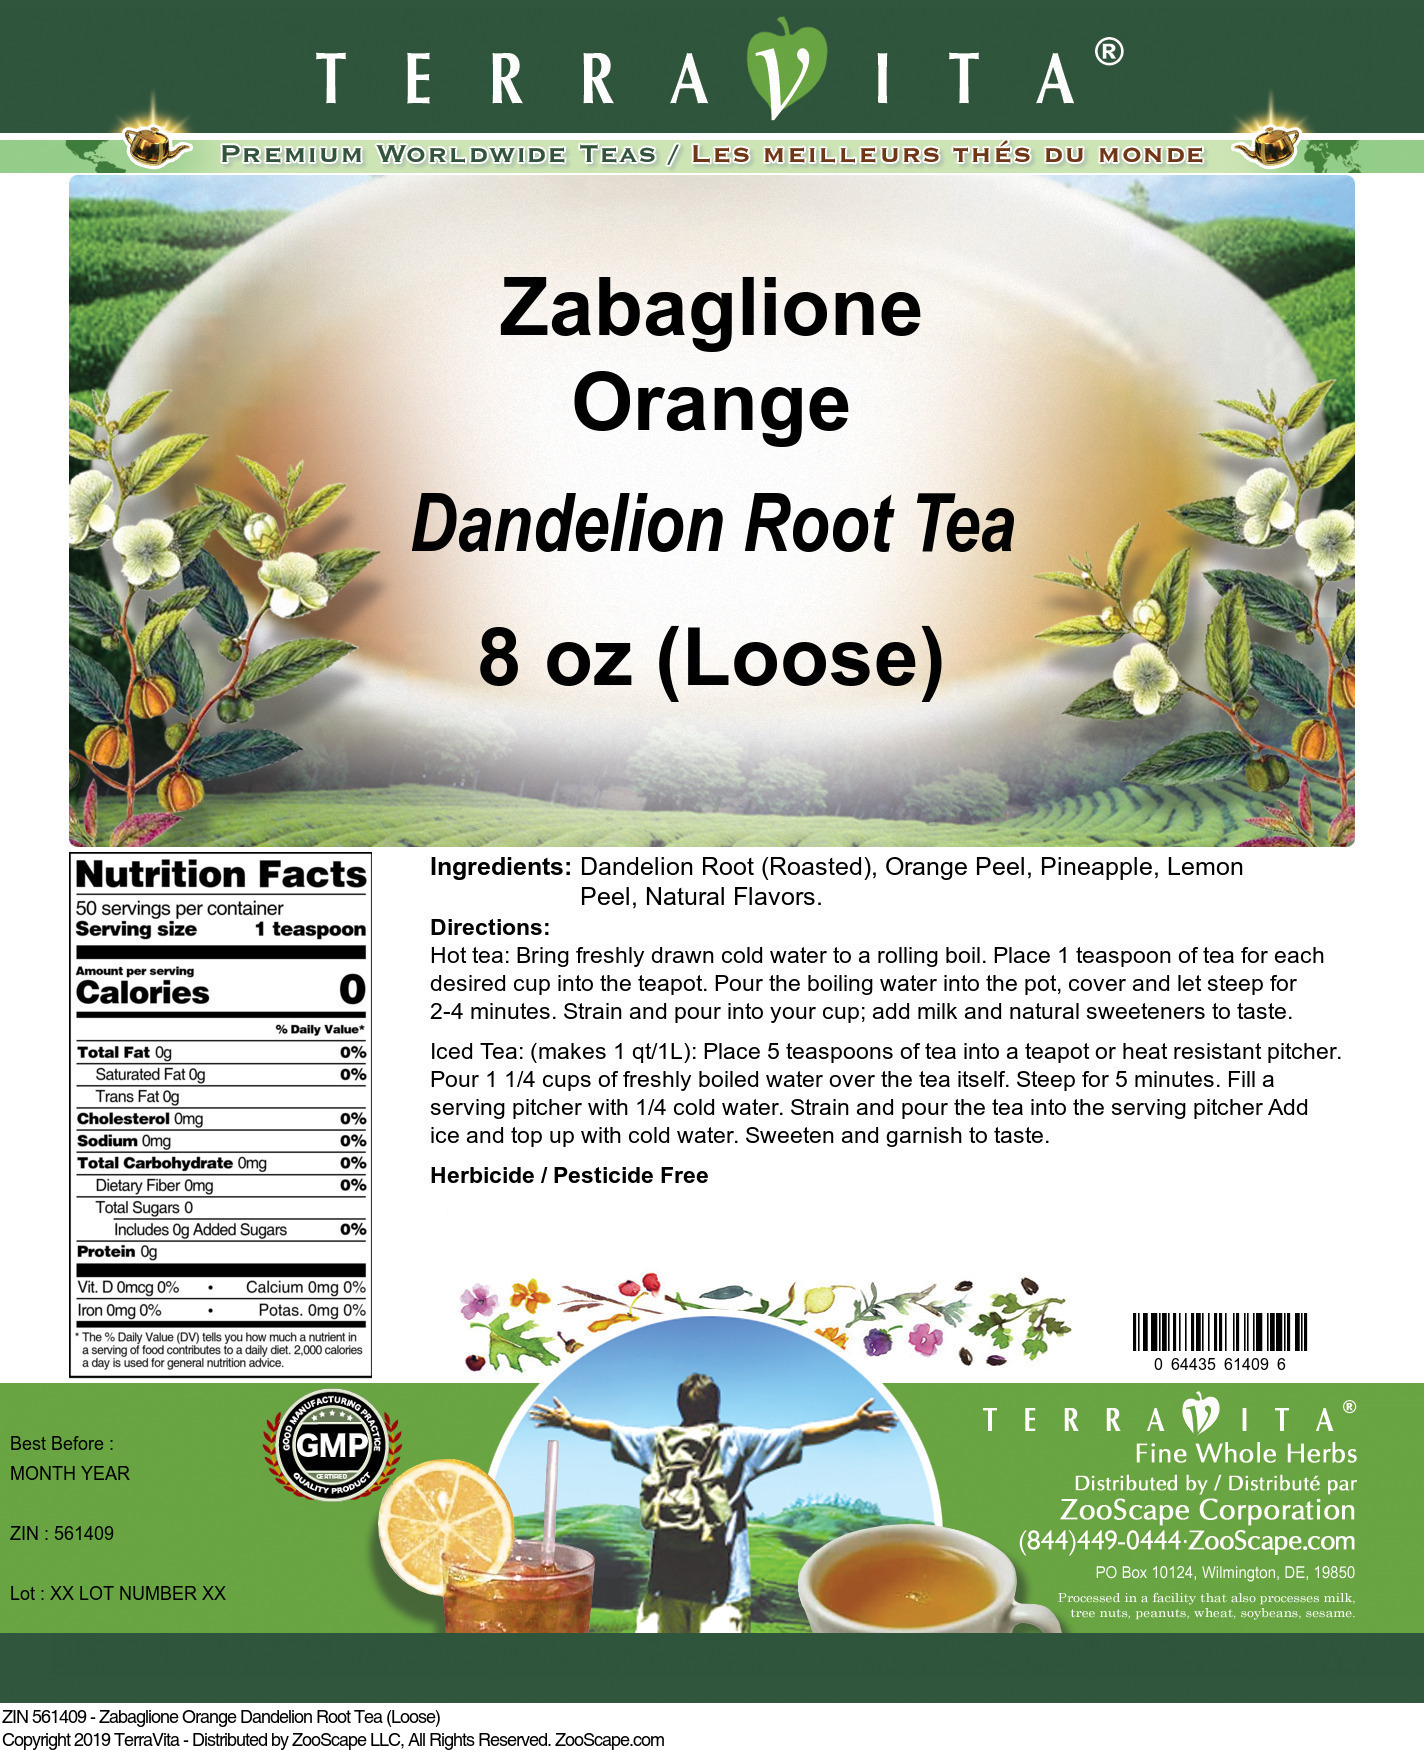 Zabaglione Orange Dandelion Root Tea (Loose) - Label